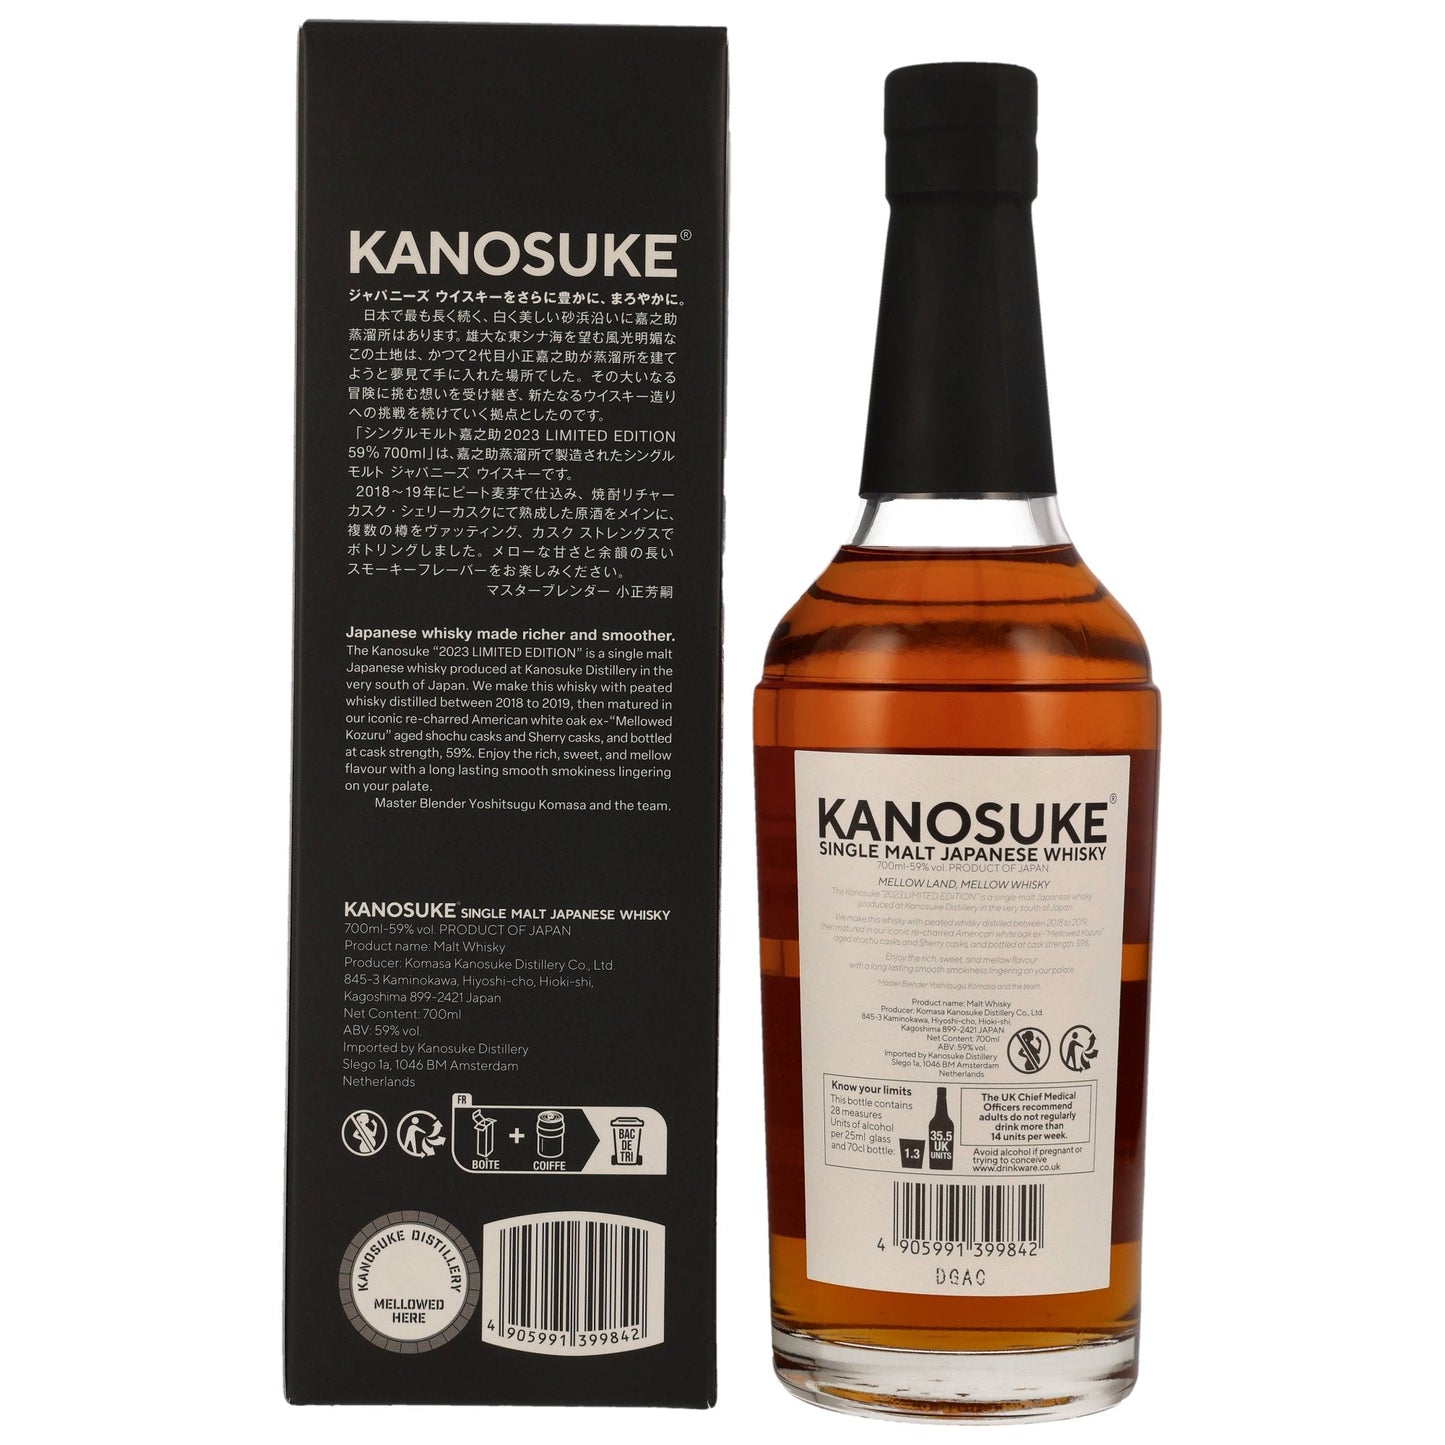 Kanosuke | 2023 Limited Edition | Japanese Whisky | 59%GET A BOTTLE